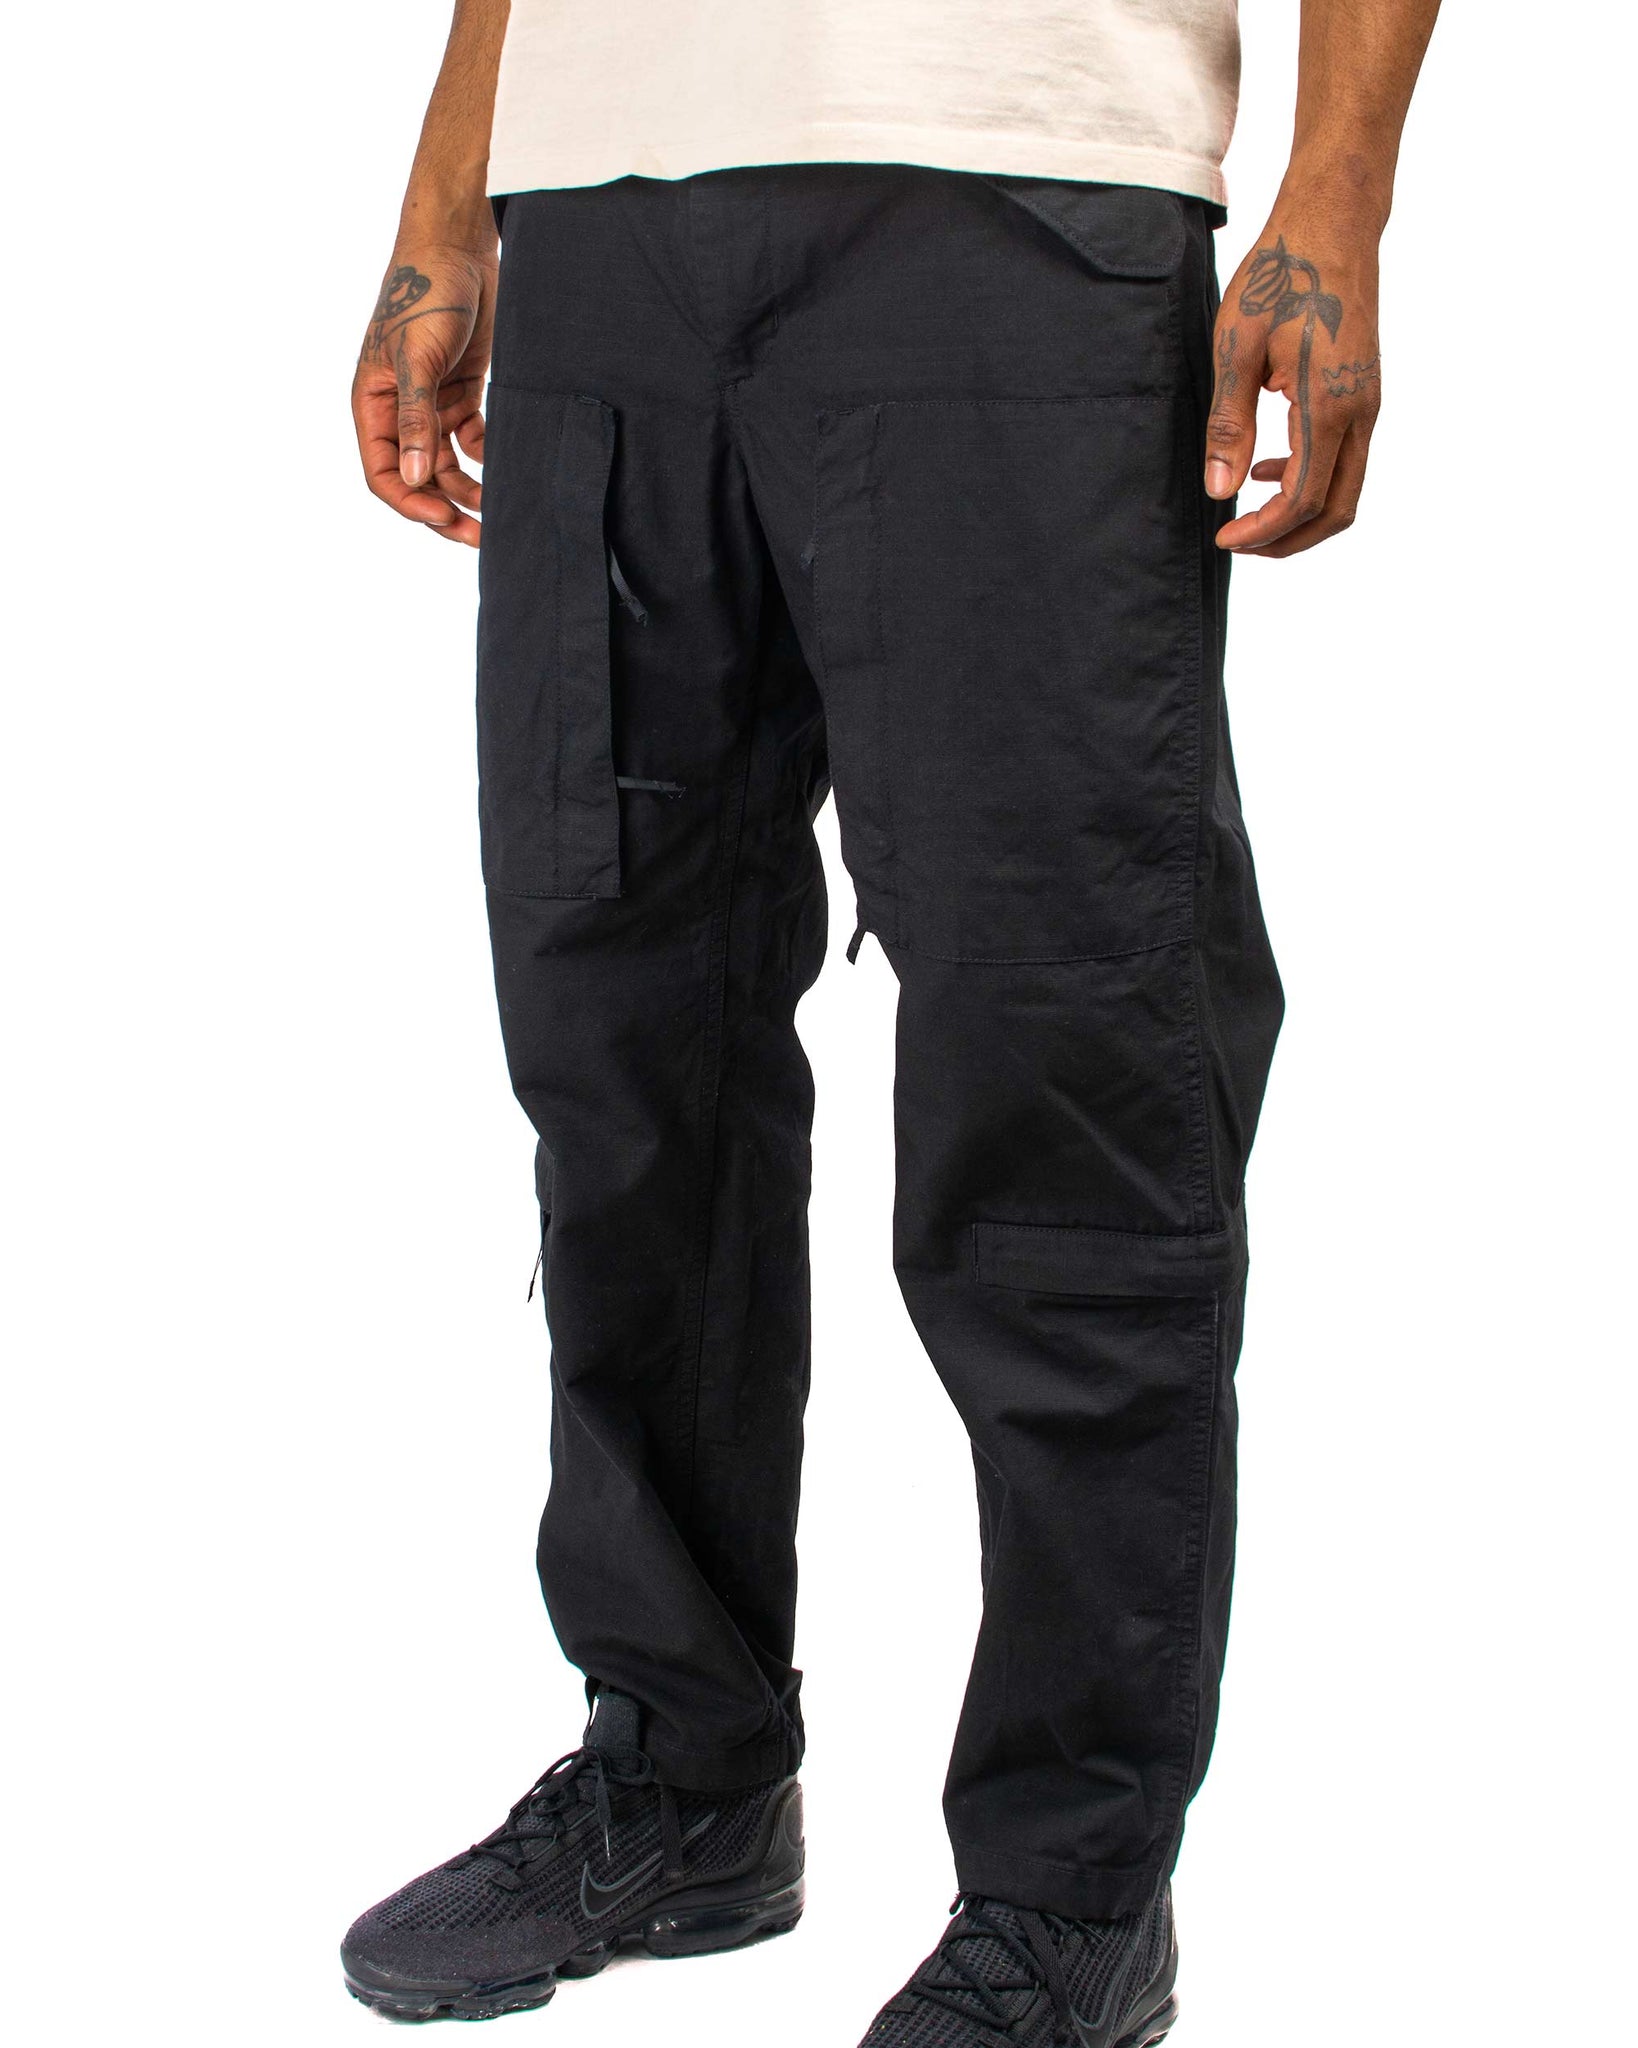 Engineered Garments Aircrew Pant Black Cotton Ripstop Close